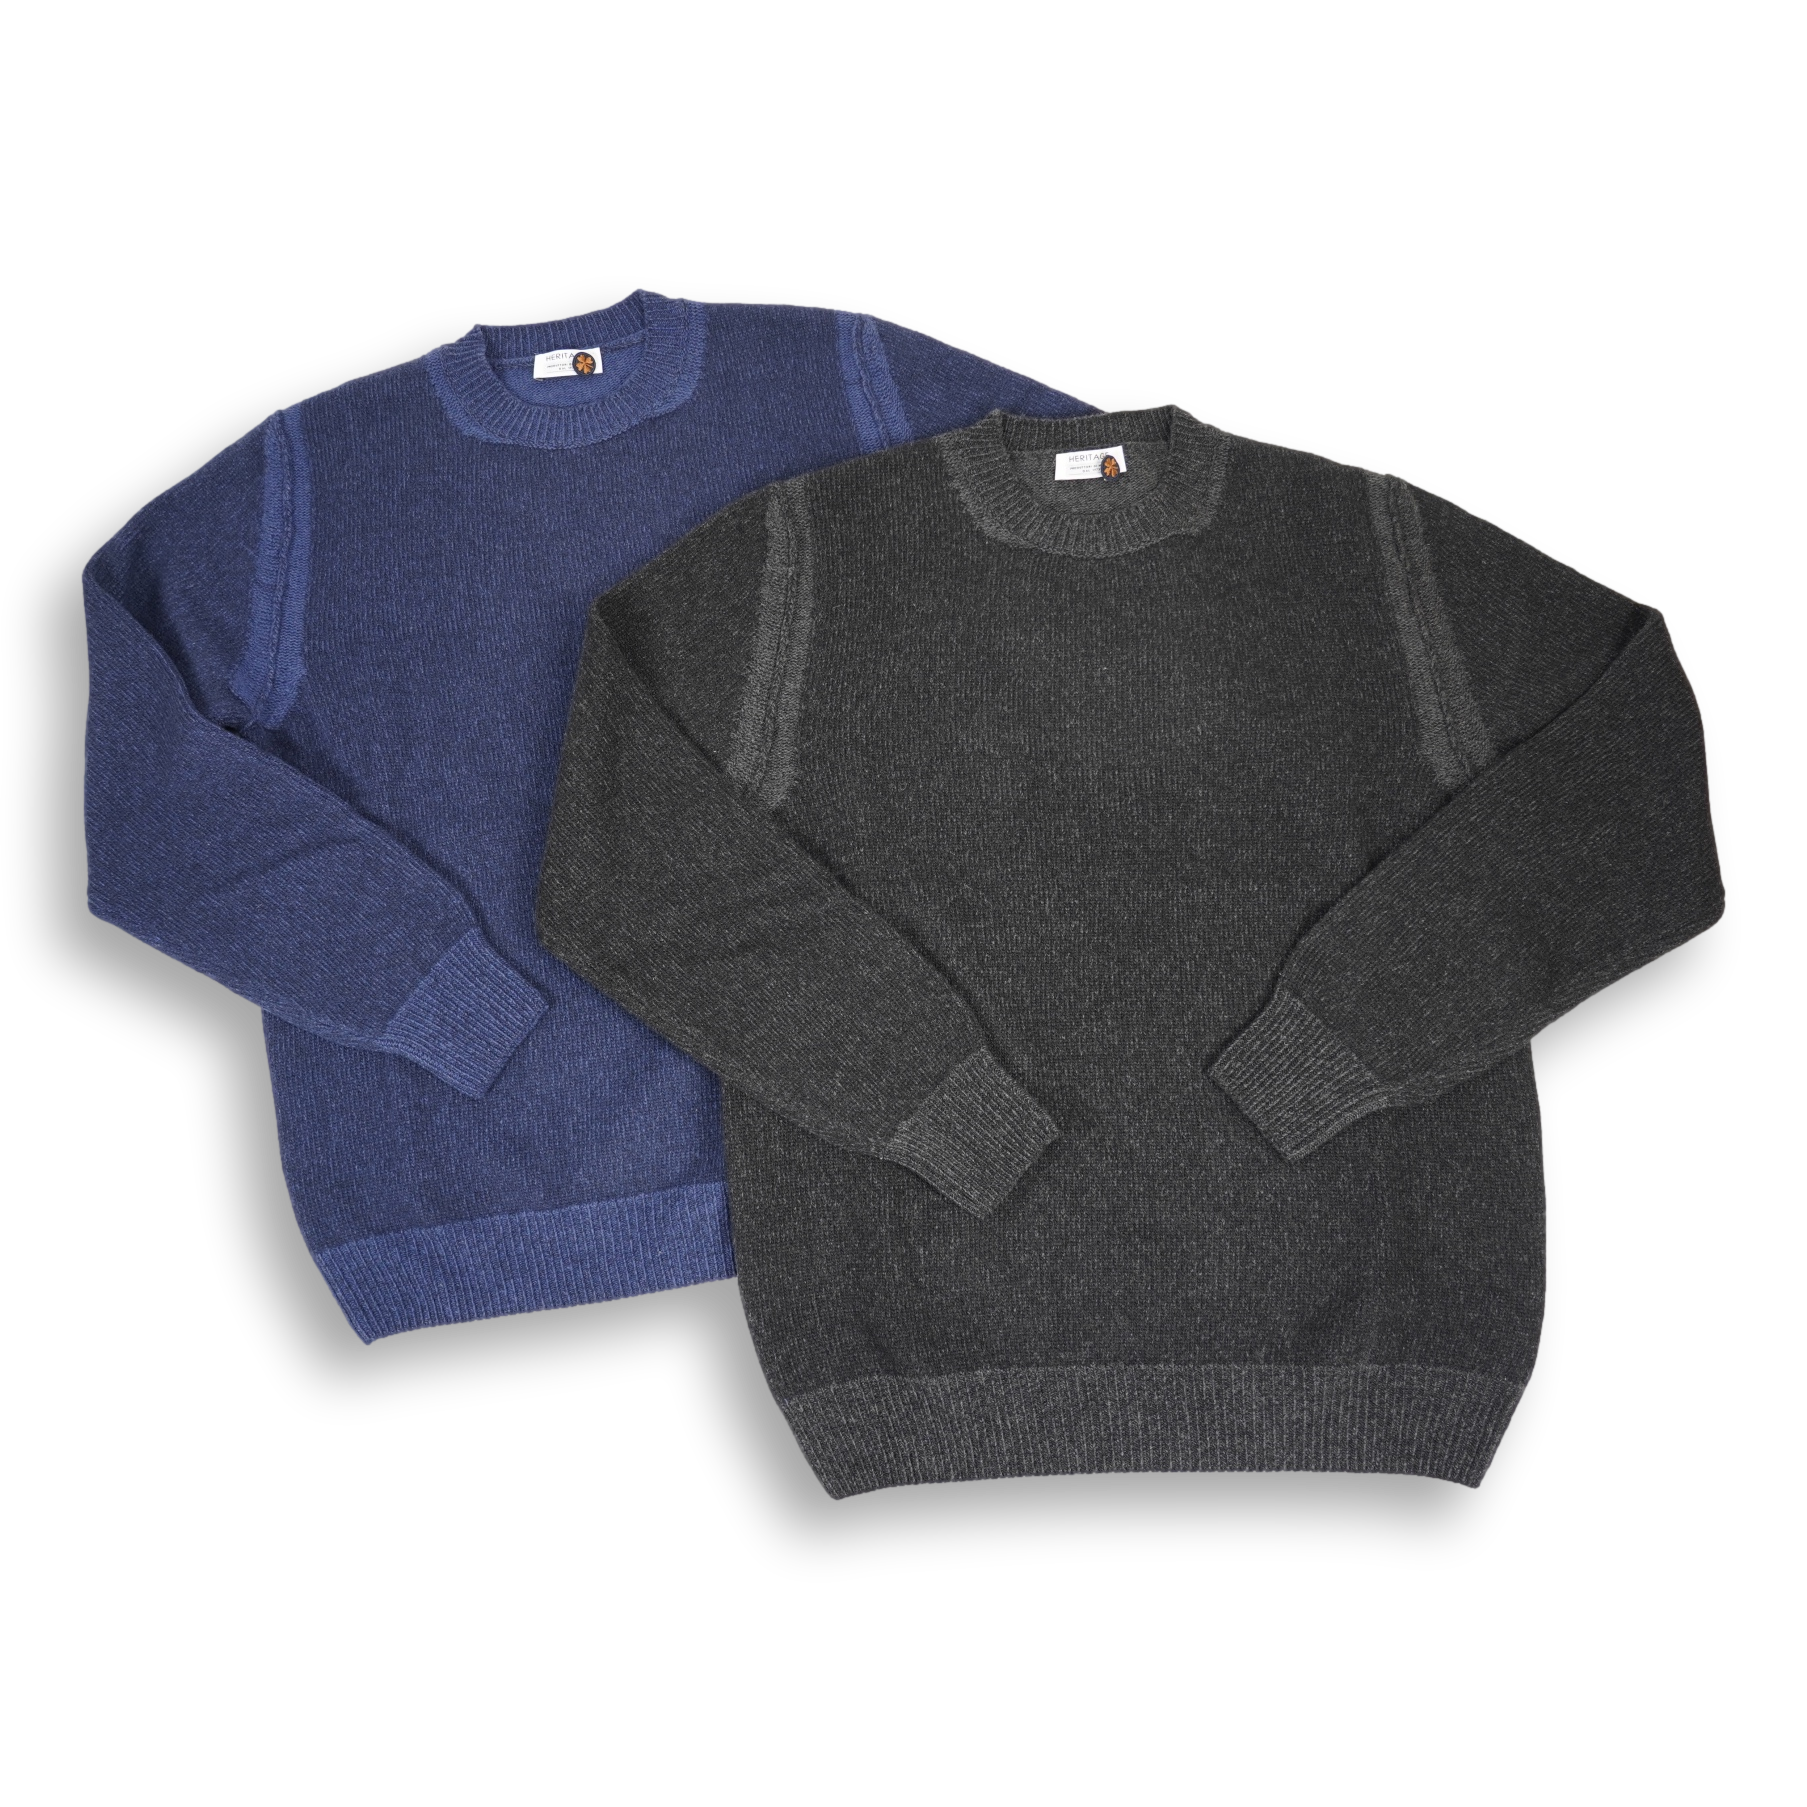 Heritage Virgin Wool and Shetland Wool Blend Crewneck Sweater